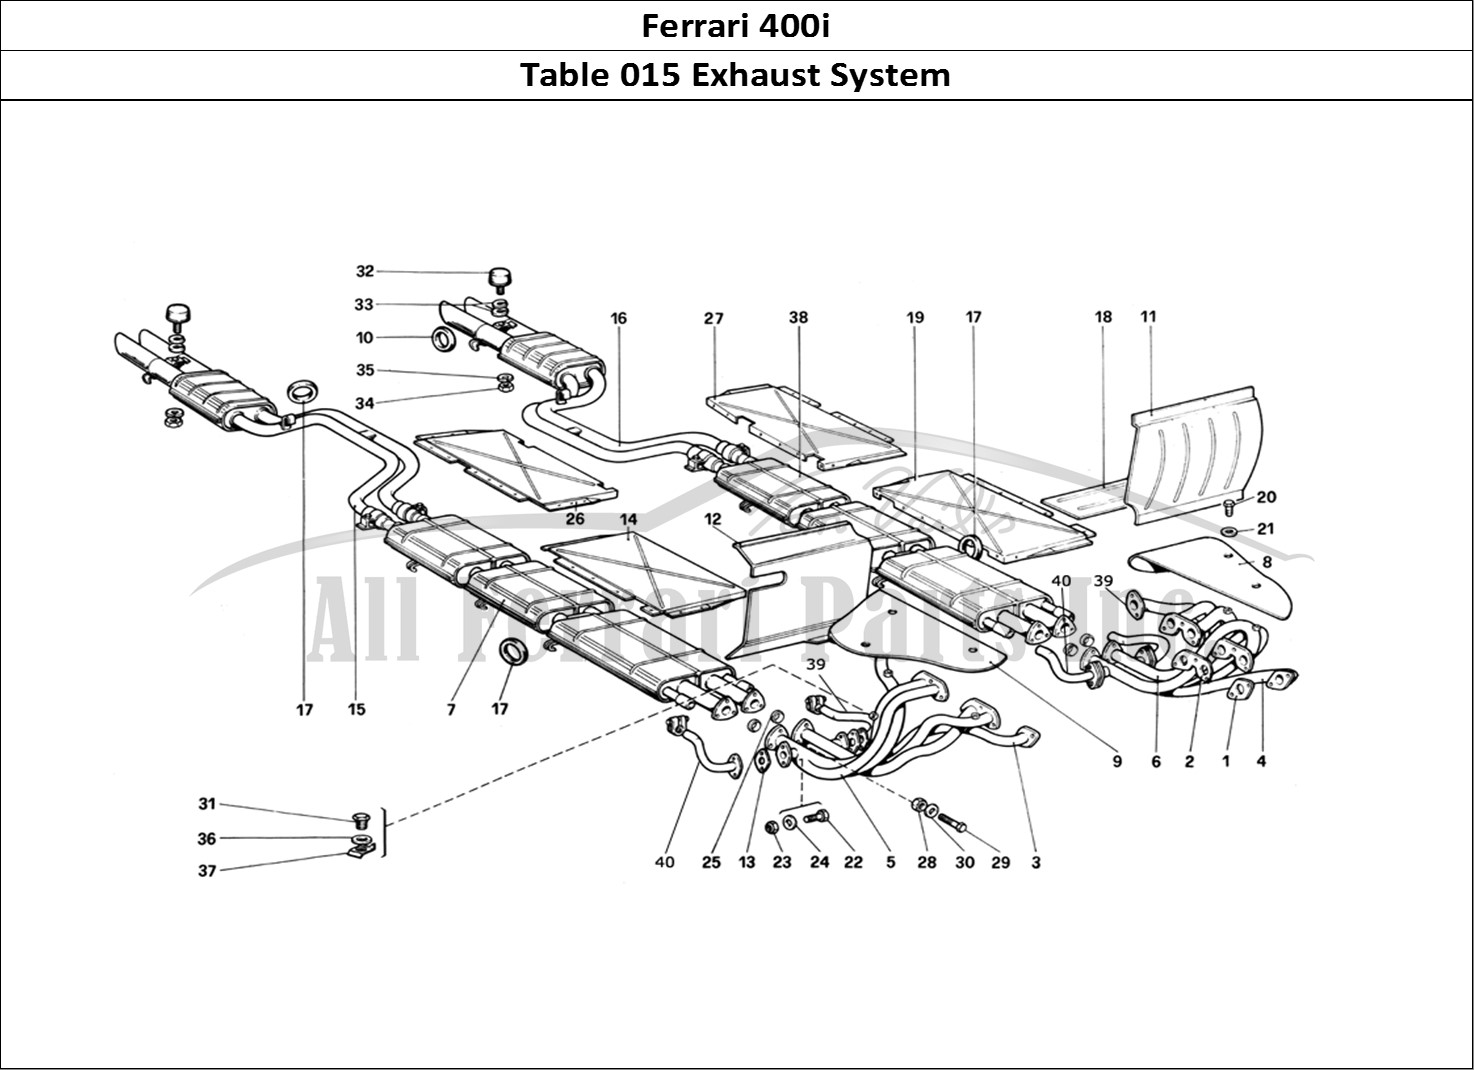 Ferrari Parts Ferrari 400i (1983 Mechanical) Page 015 Exhaust System